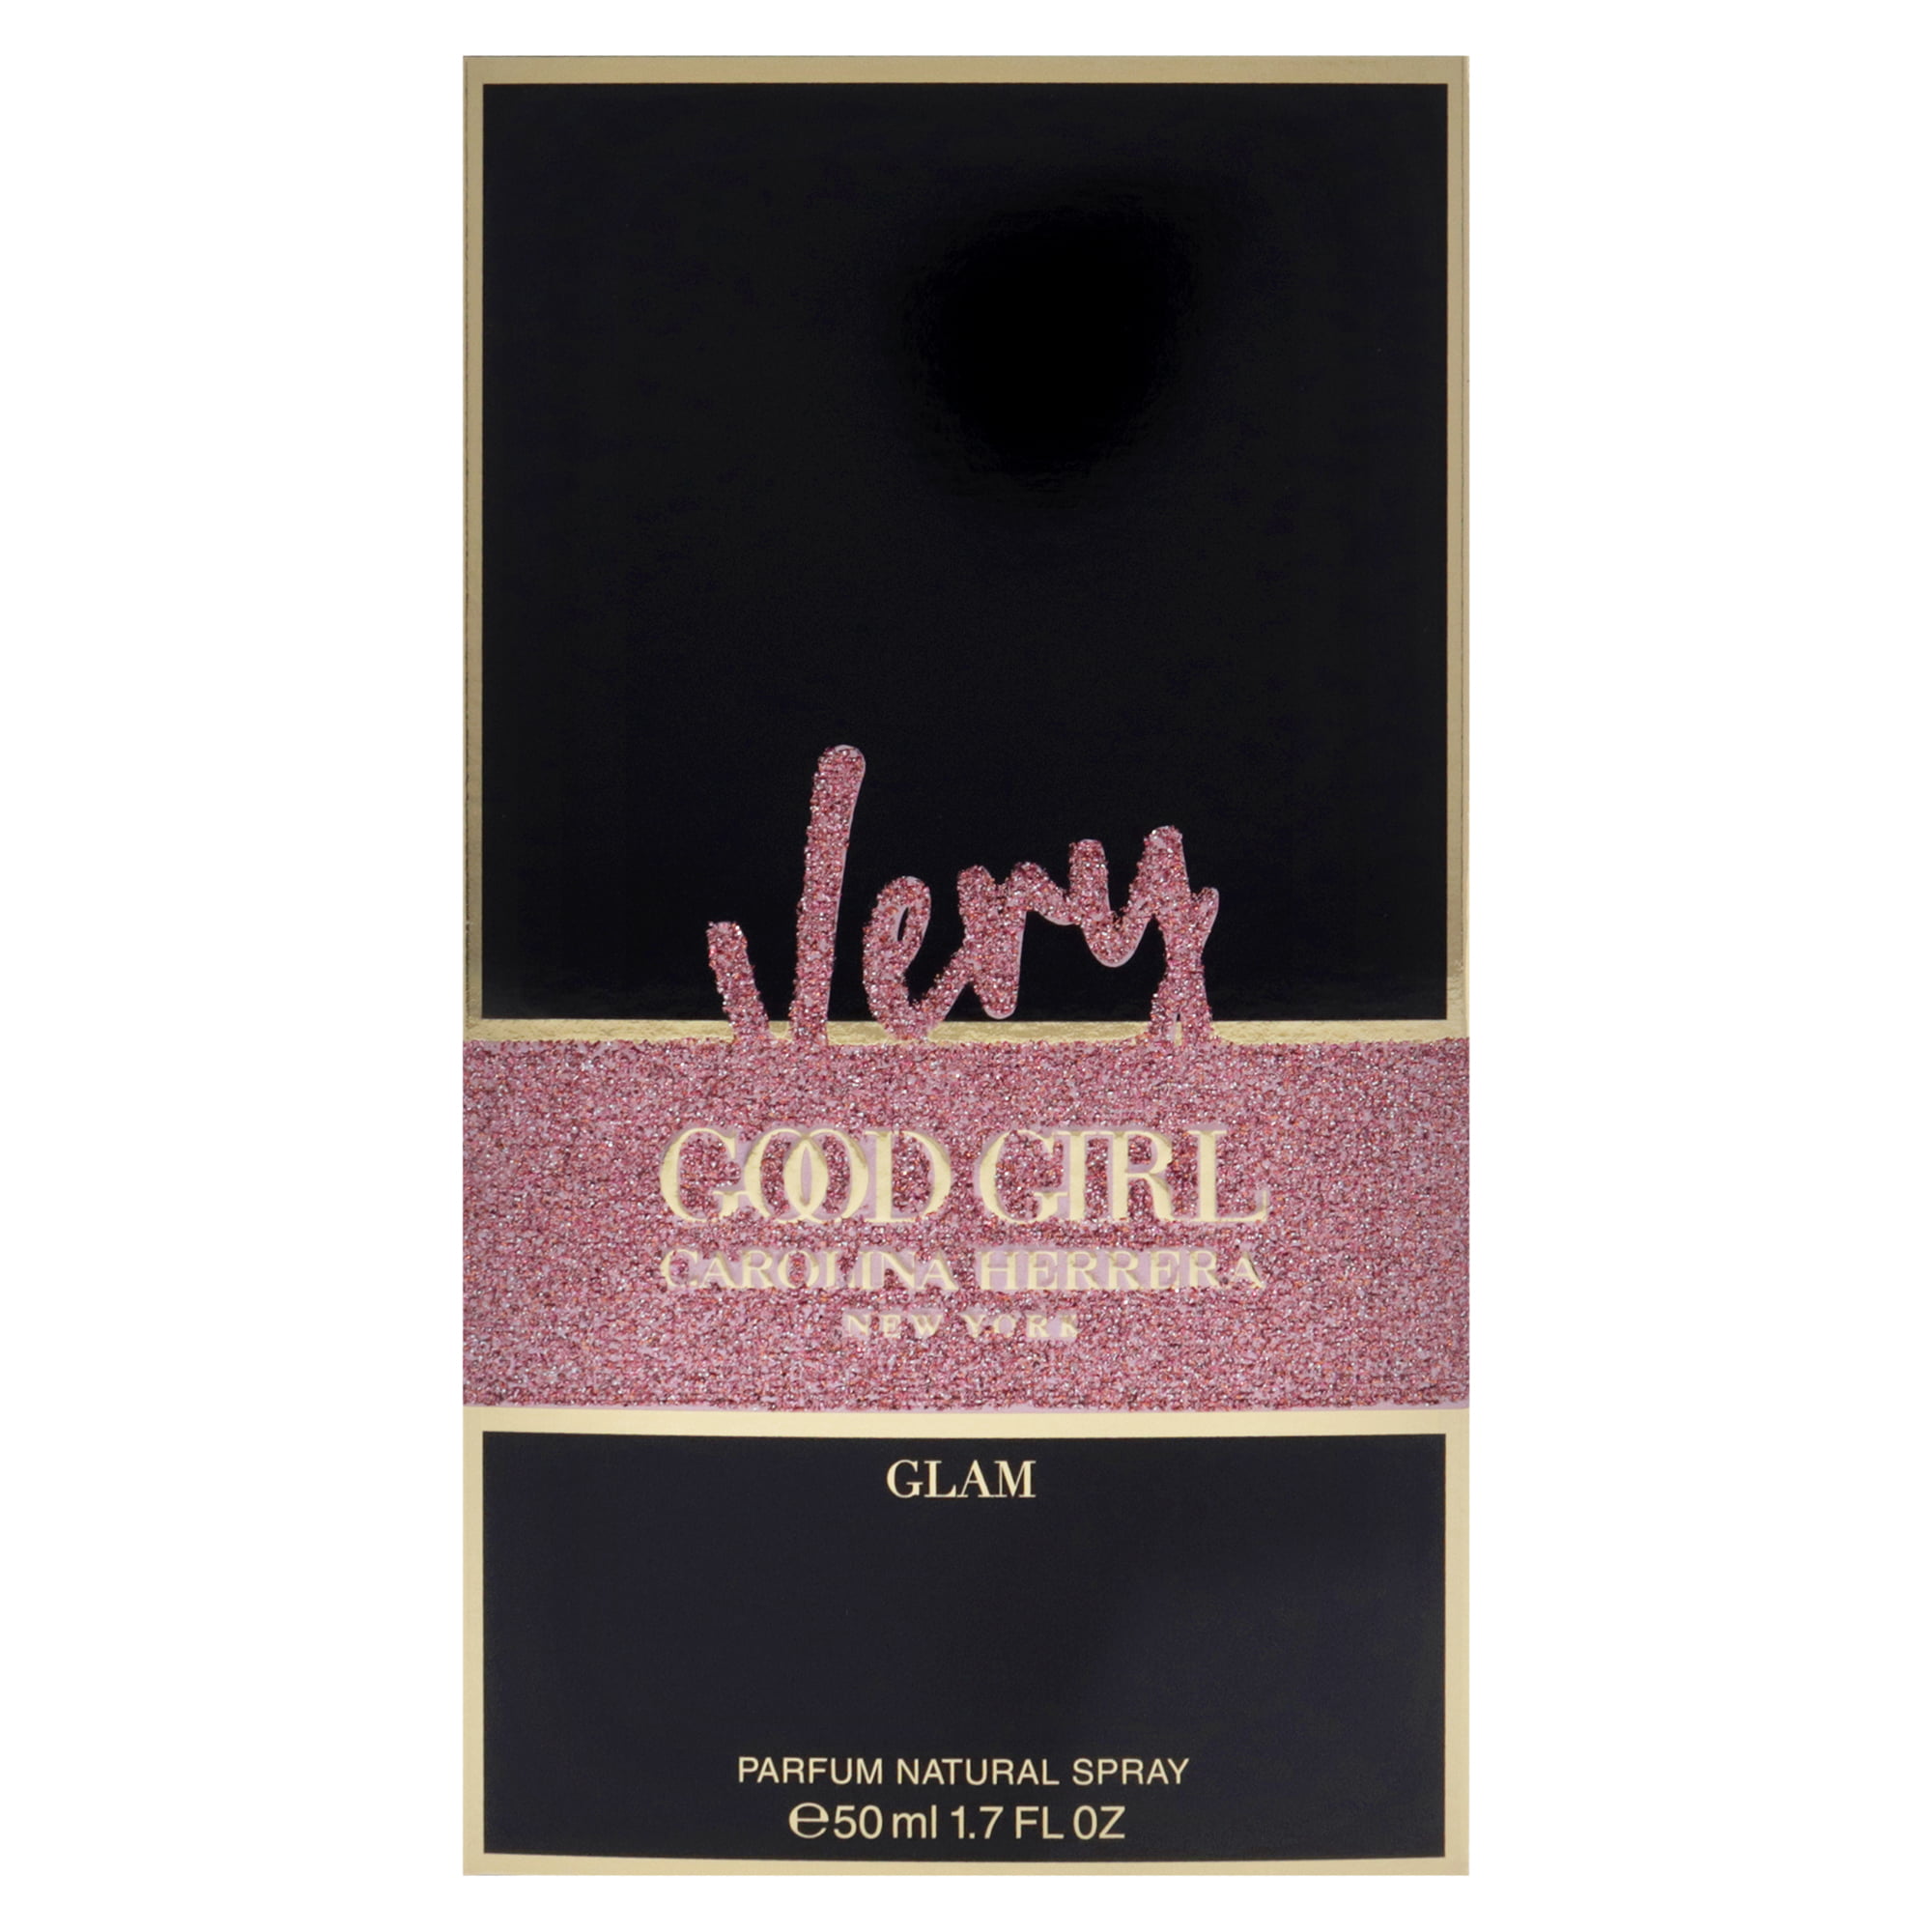 Carolina Herrera Very Good Girl Glam Eau De Parfum Spray 2.7 oz 80 ml